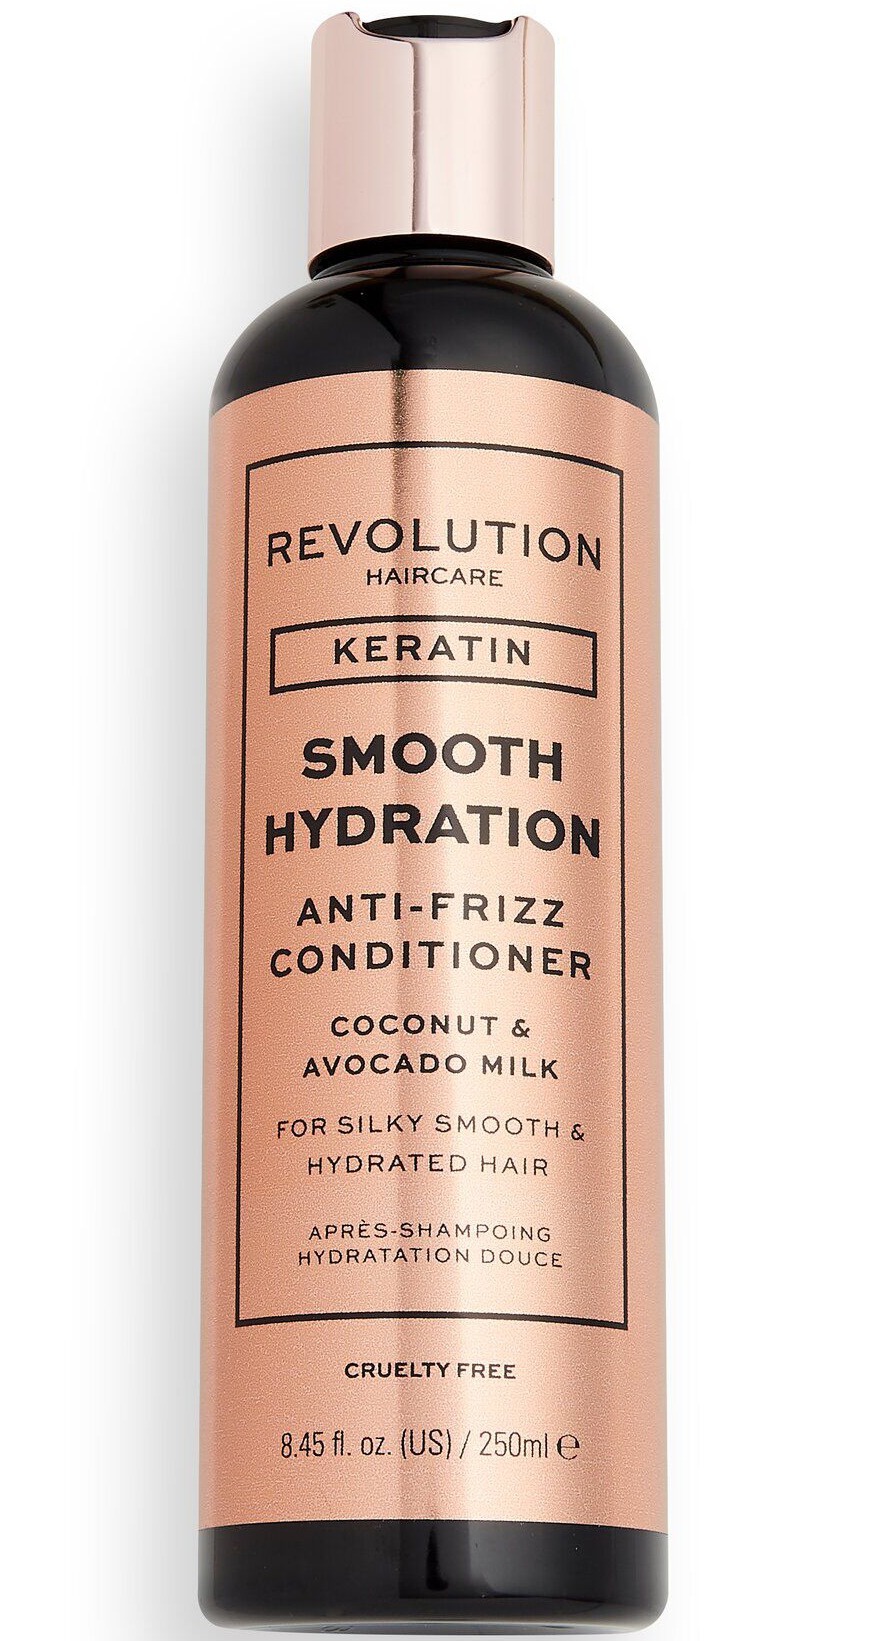 Revolution Haircare Keratin Smooth Hydration Anti-Frizz Conditioner